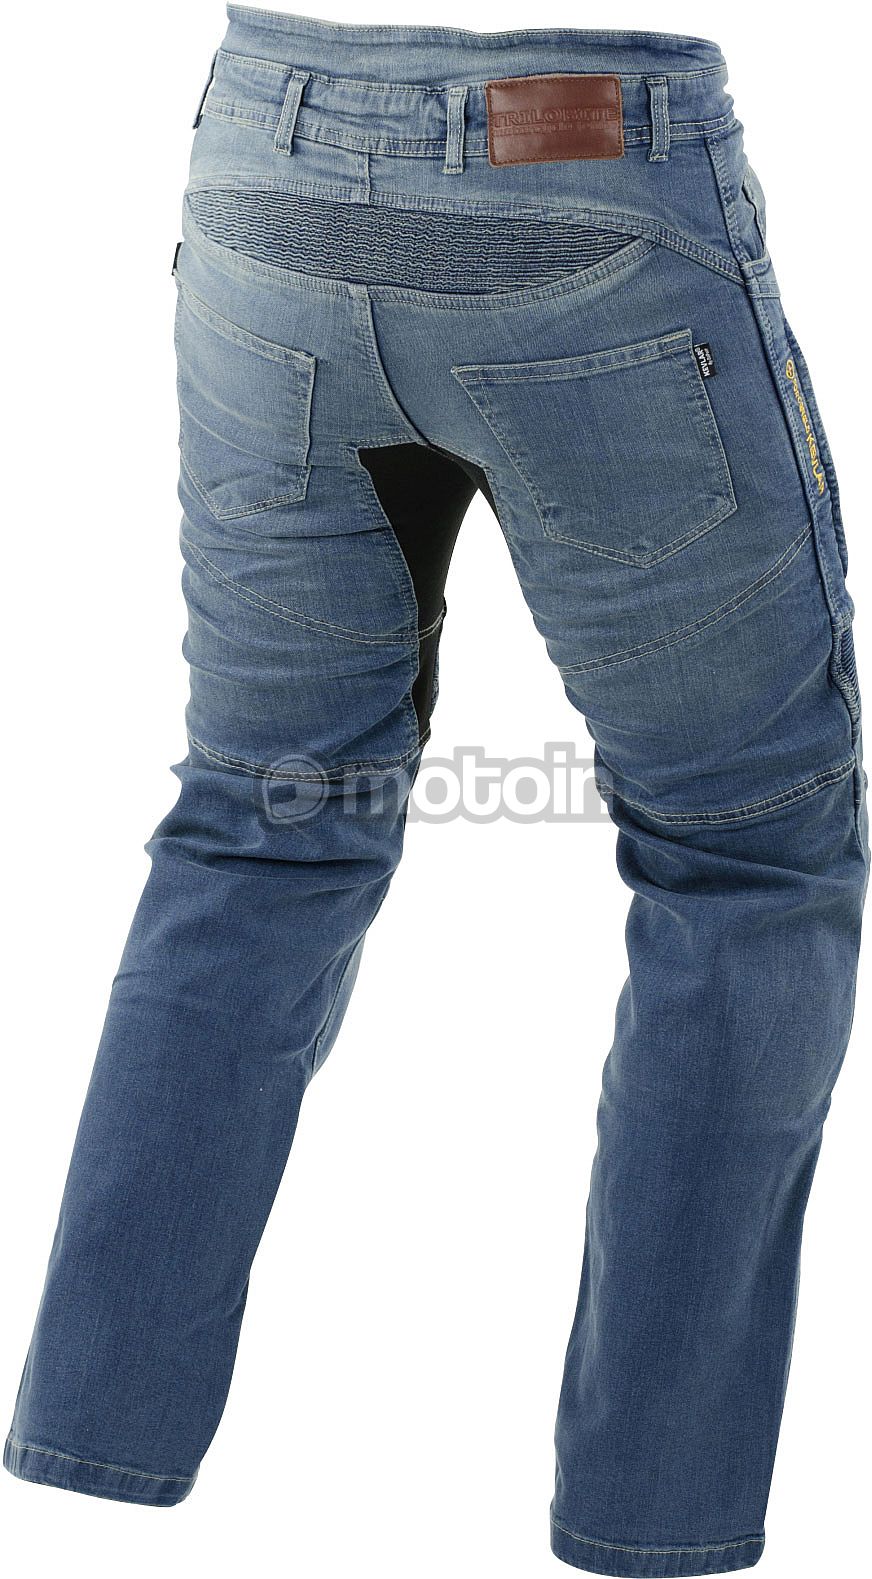 Trilobite jeans -